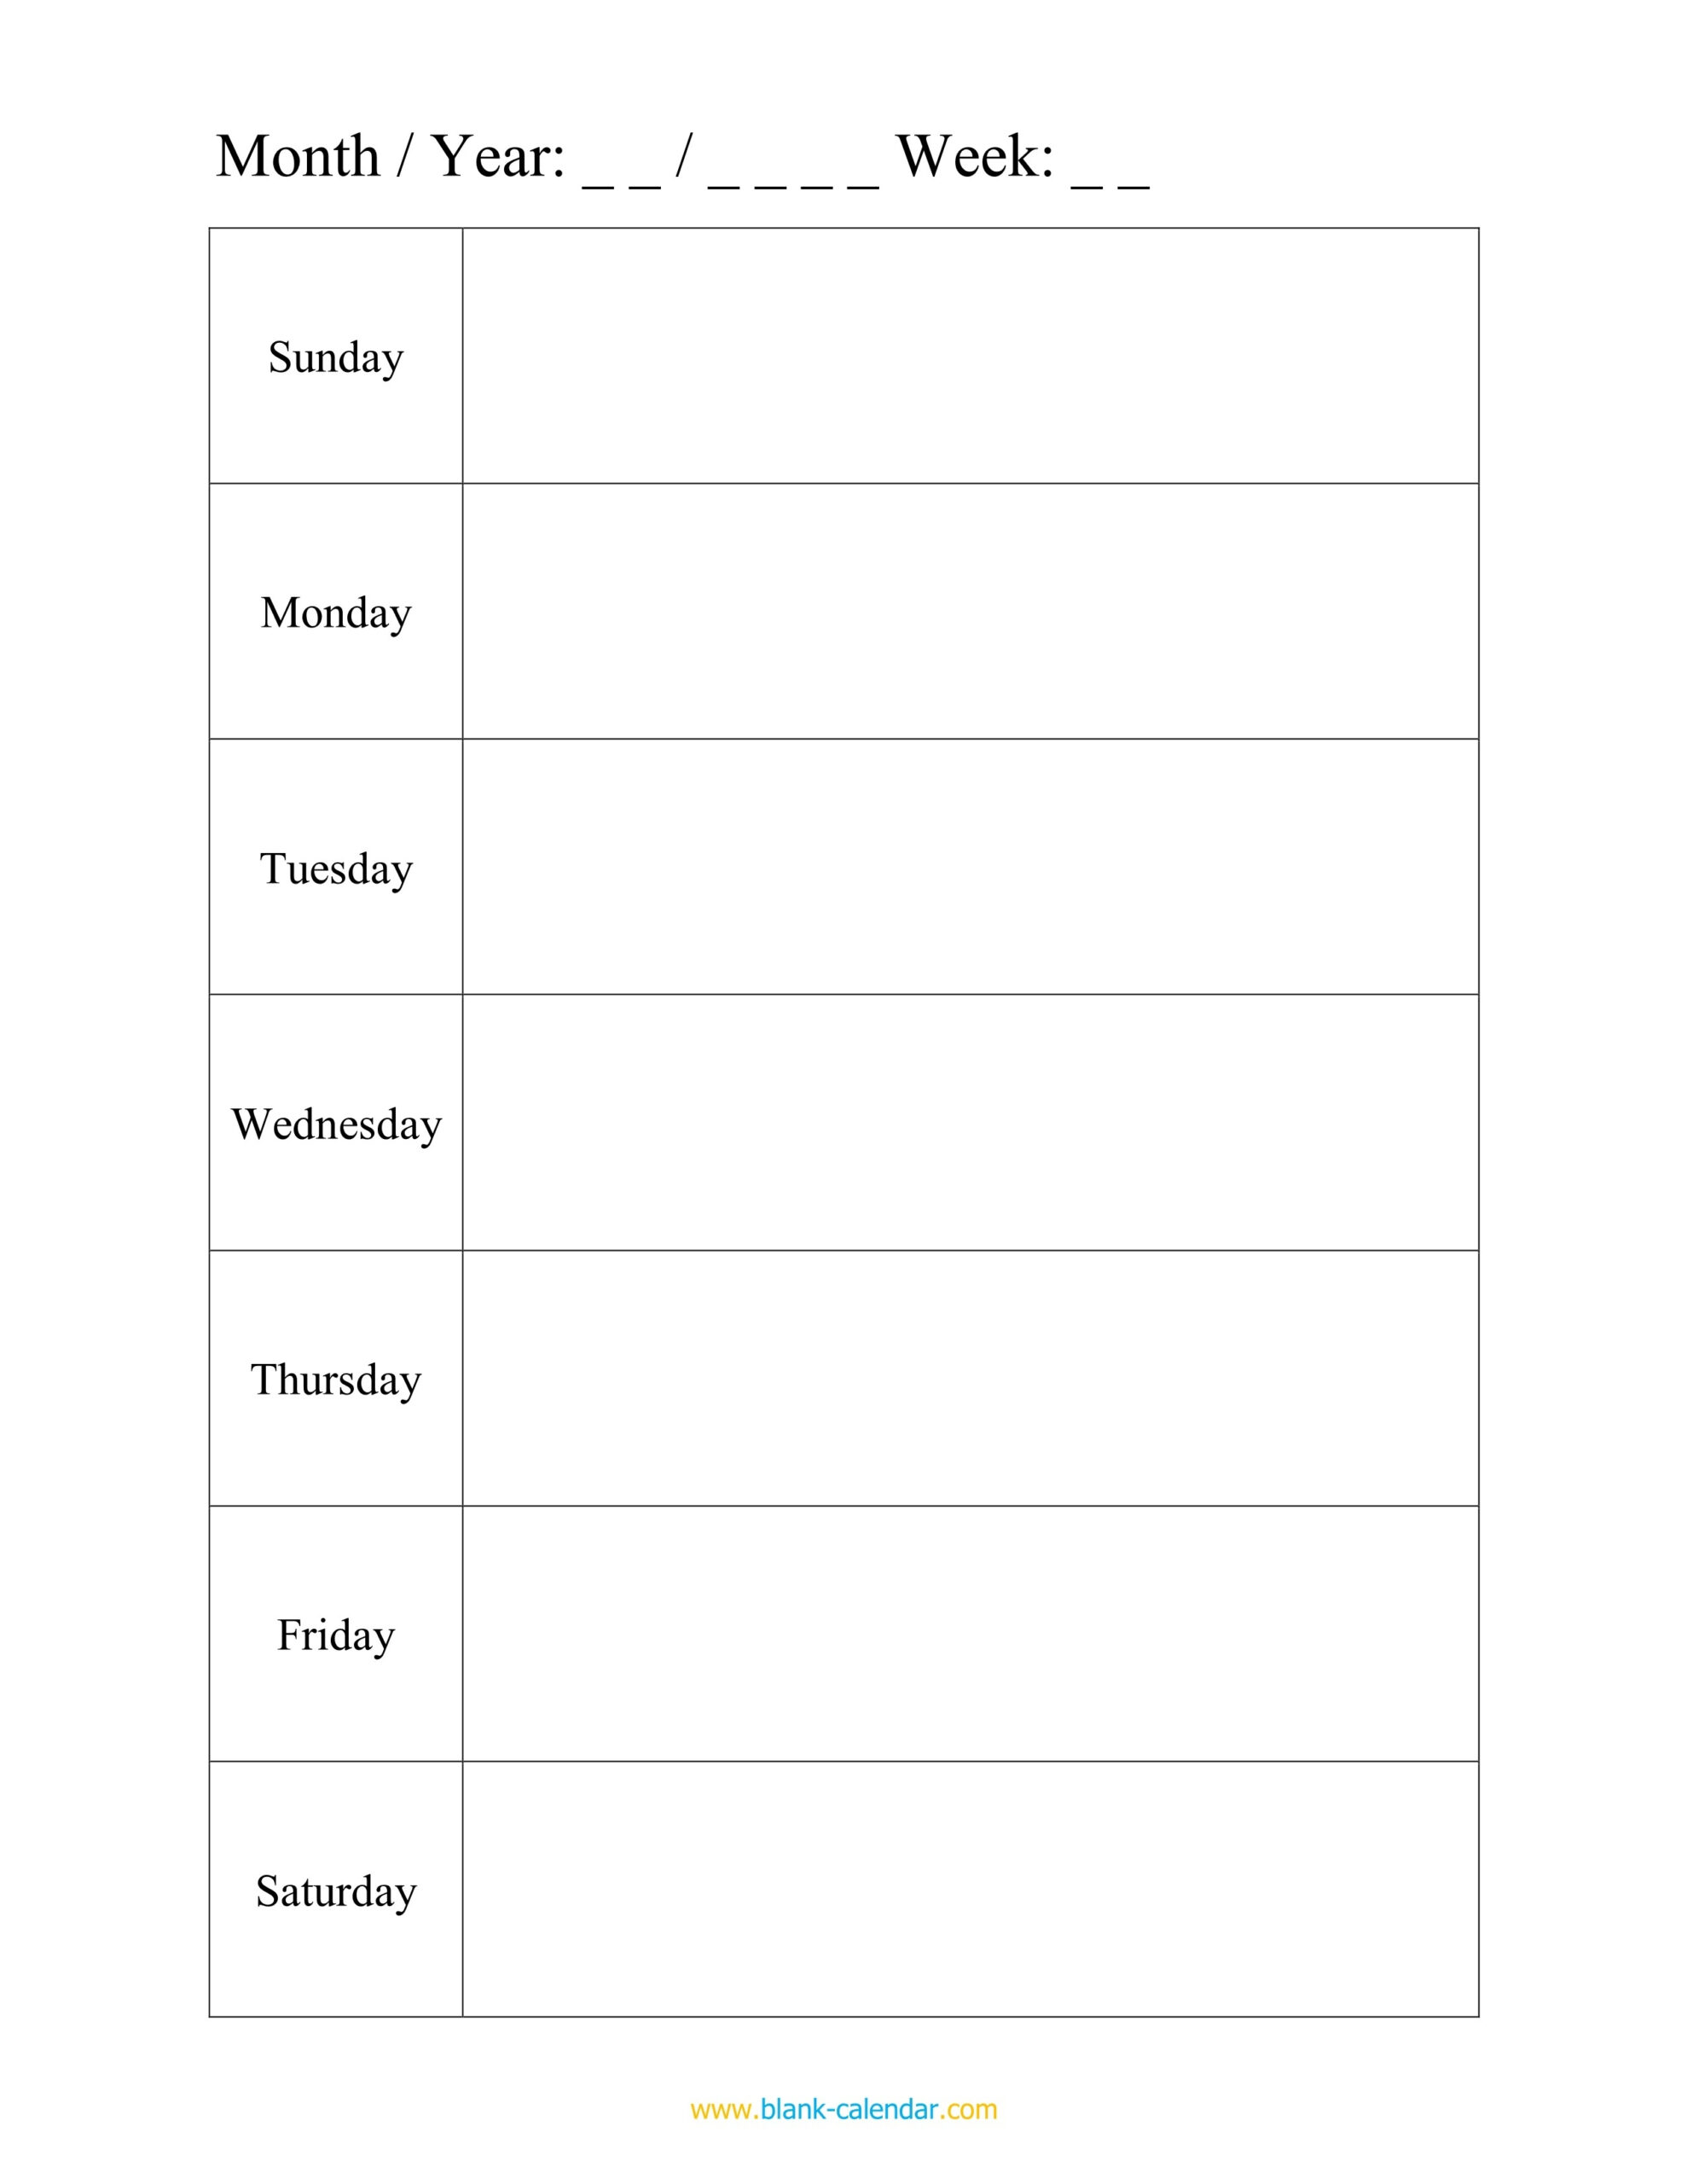 Monday Through Friday Planning Template | Calendar